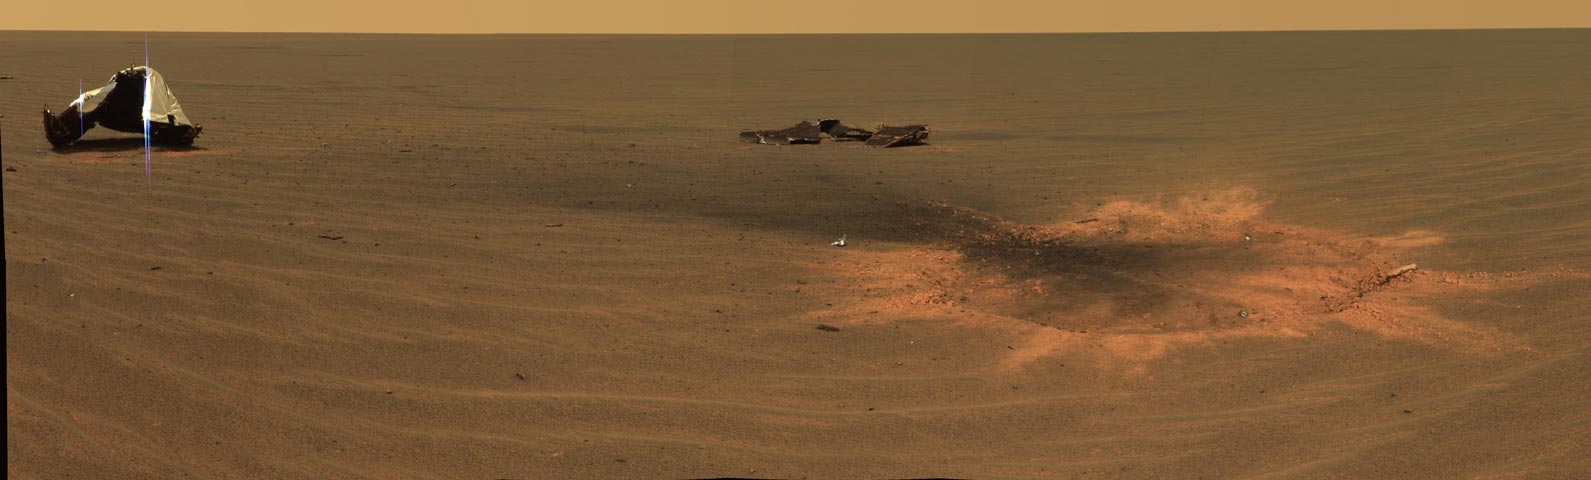 Heat-Shield-Impact-Crater-on-Mars